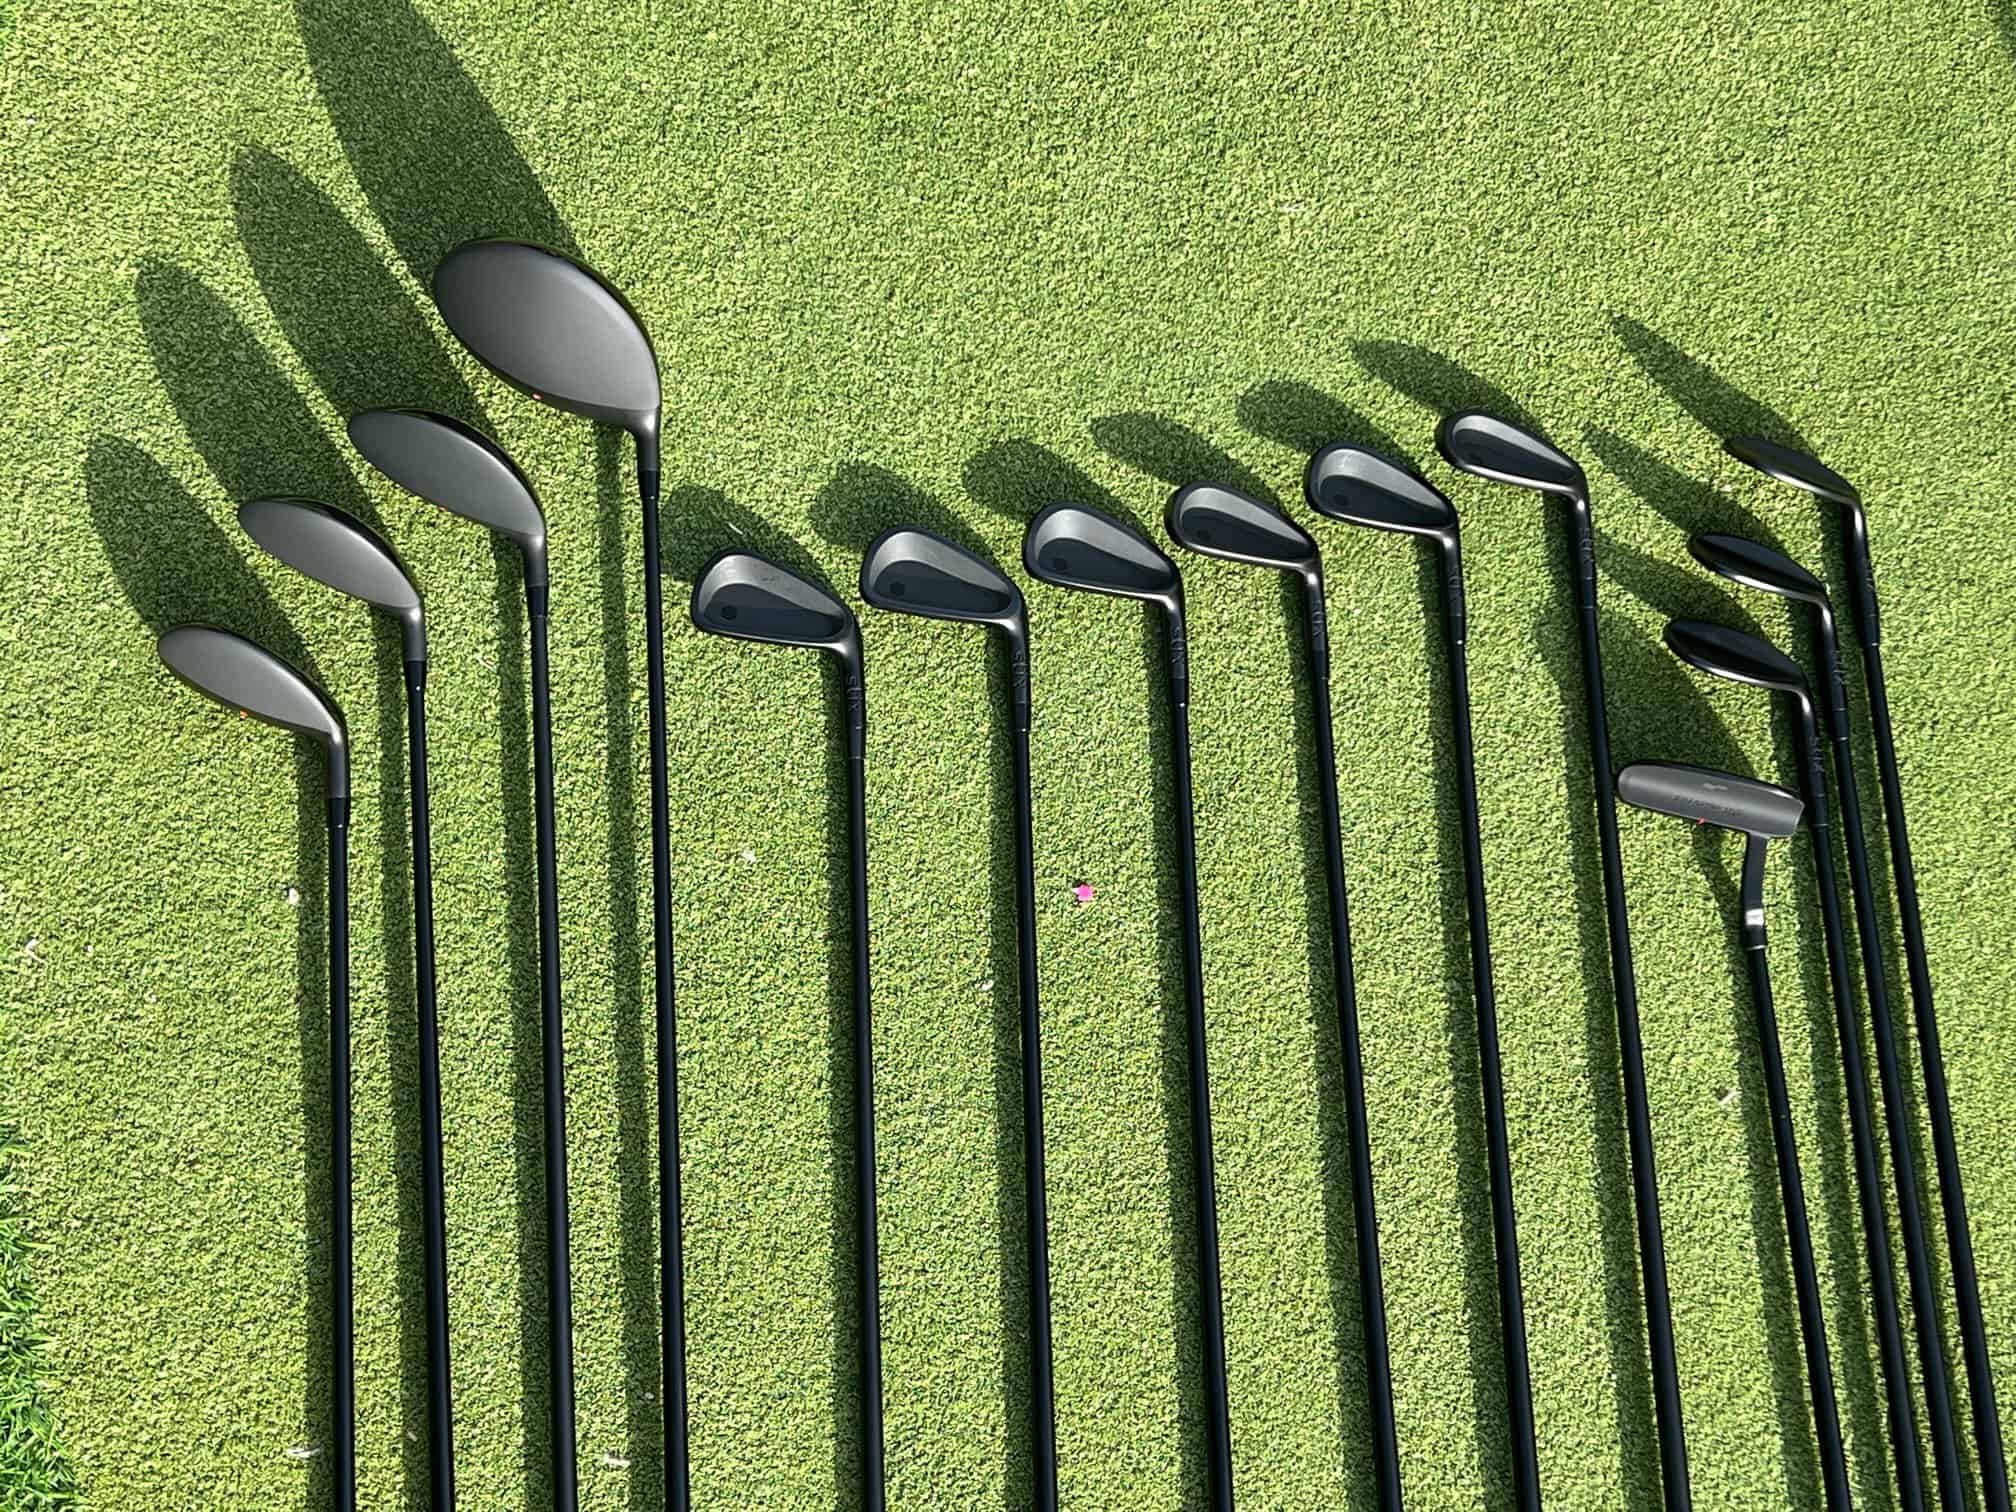 Stix Golf - Shop The Complete Set (14 Clubs)